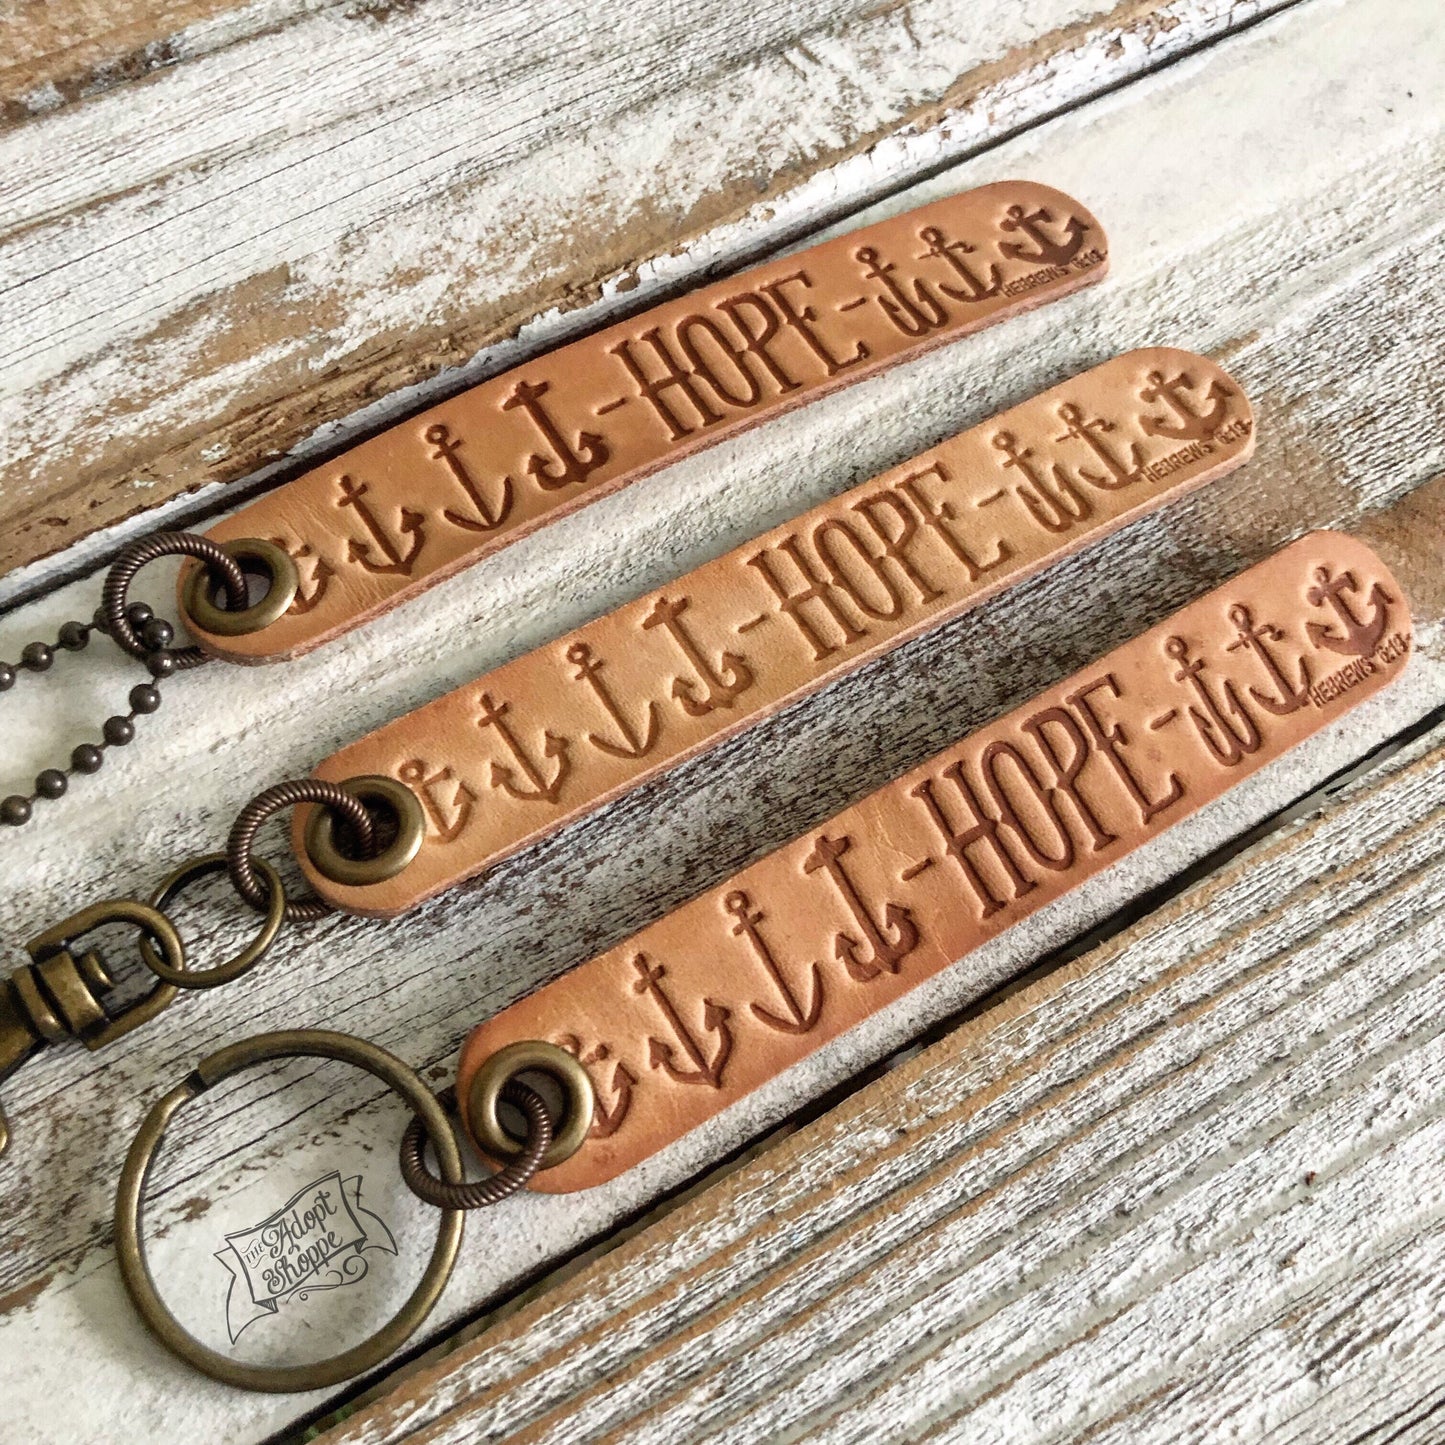 hope many anchors Hebrews 6:19 (camel/natural) leather tag